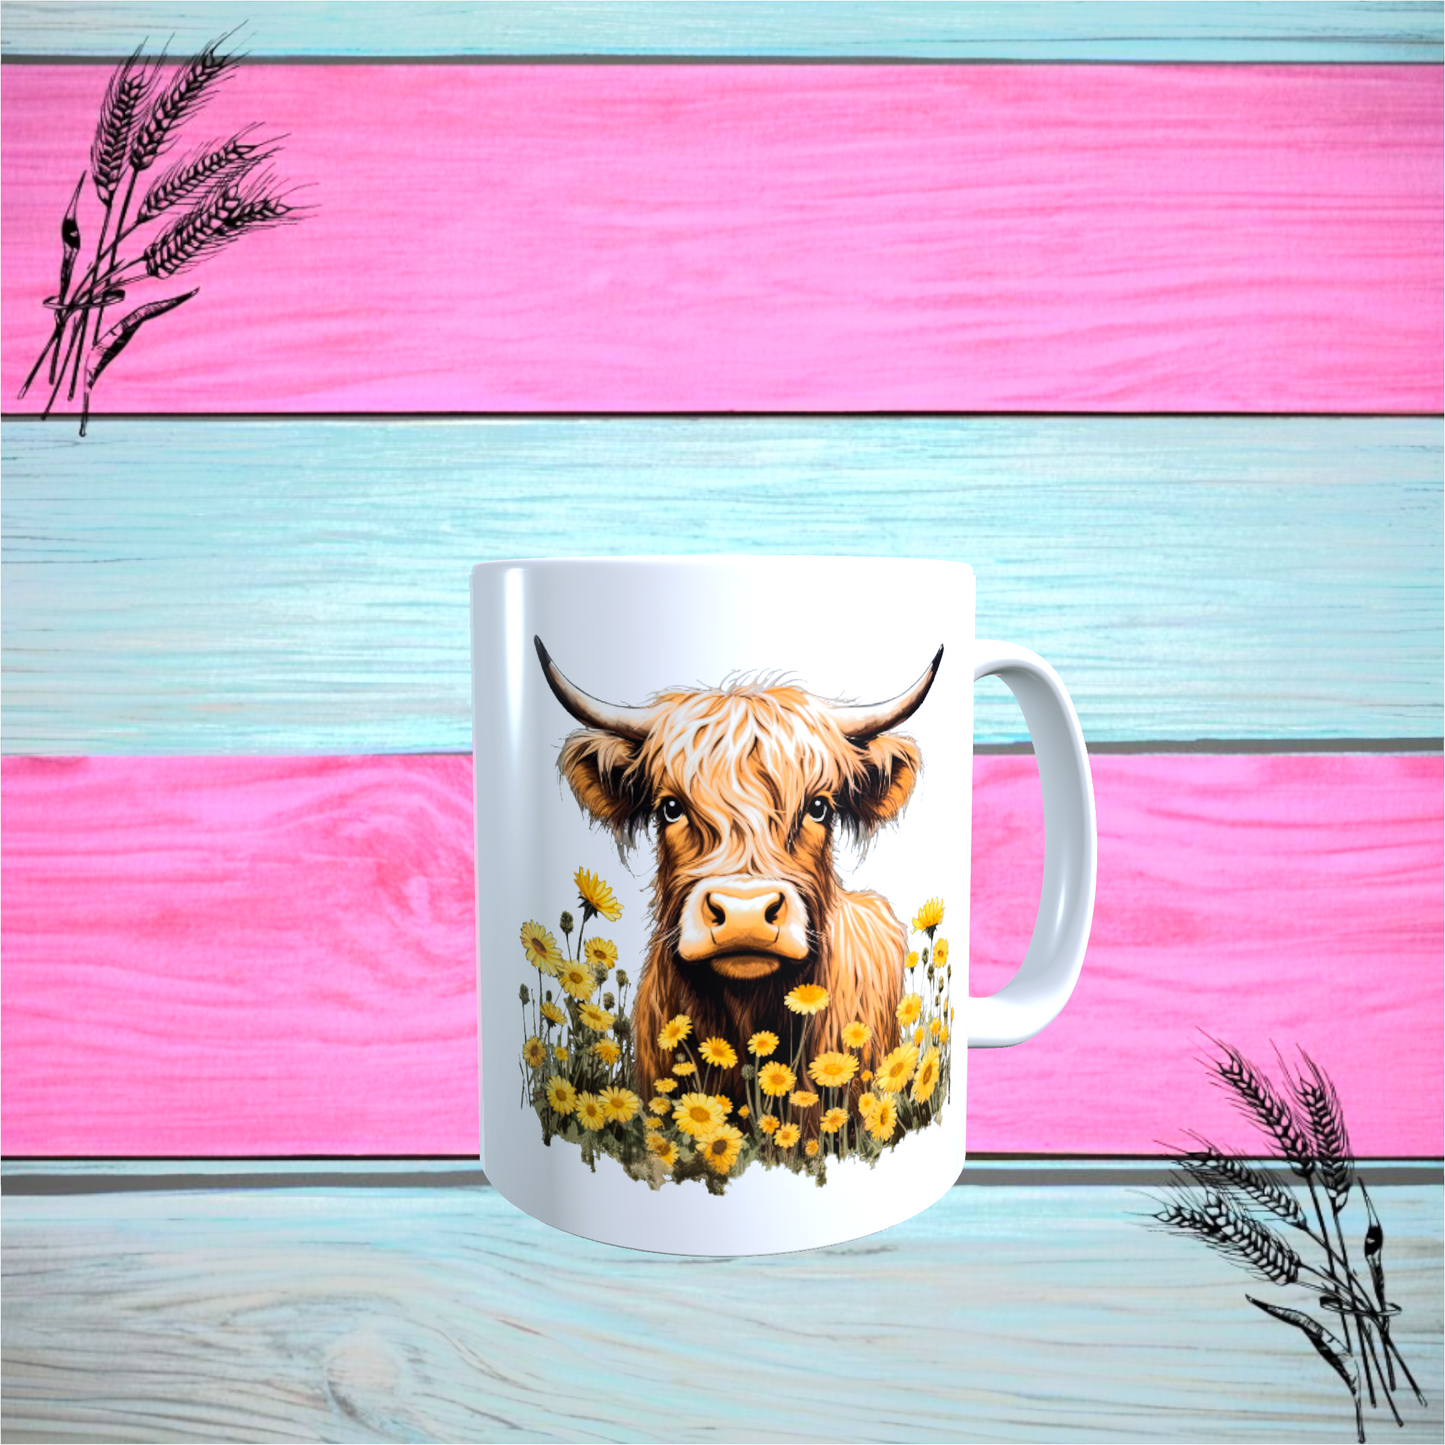 Highland Cow Sublimated Coffee Mug, Great Quality, Free P+P